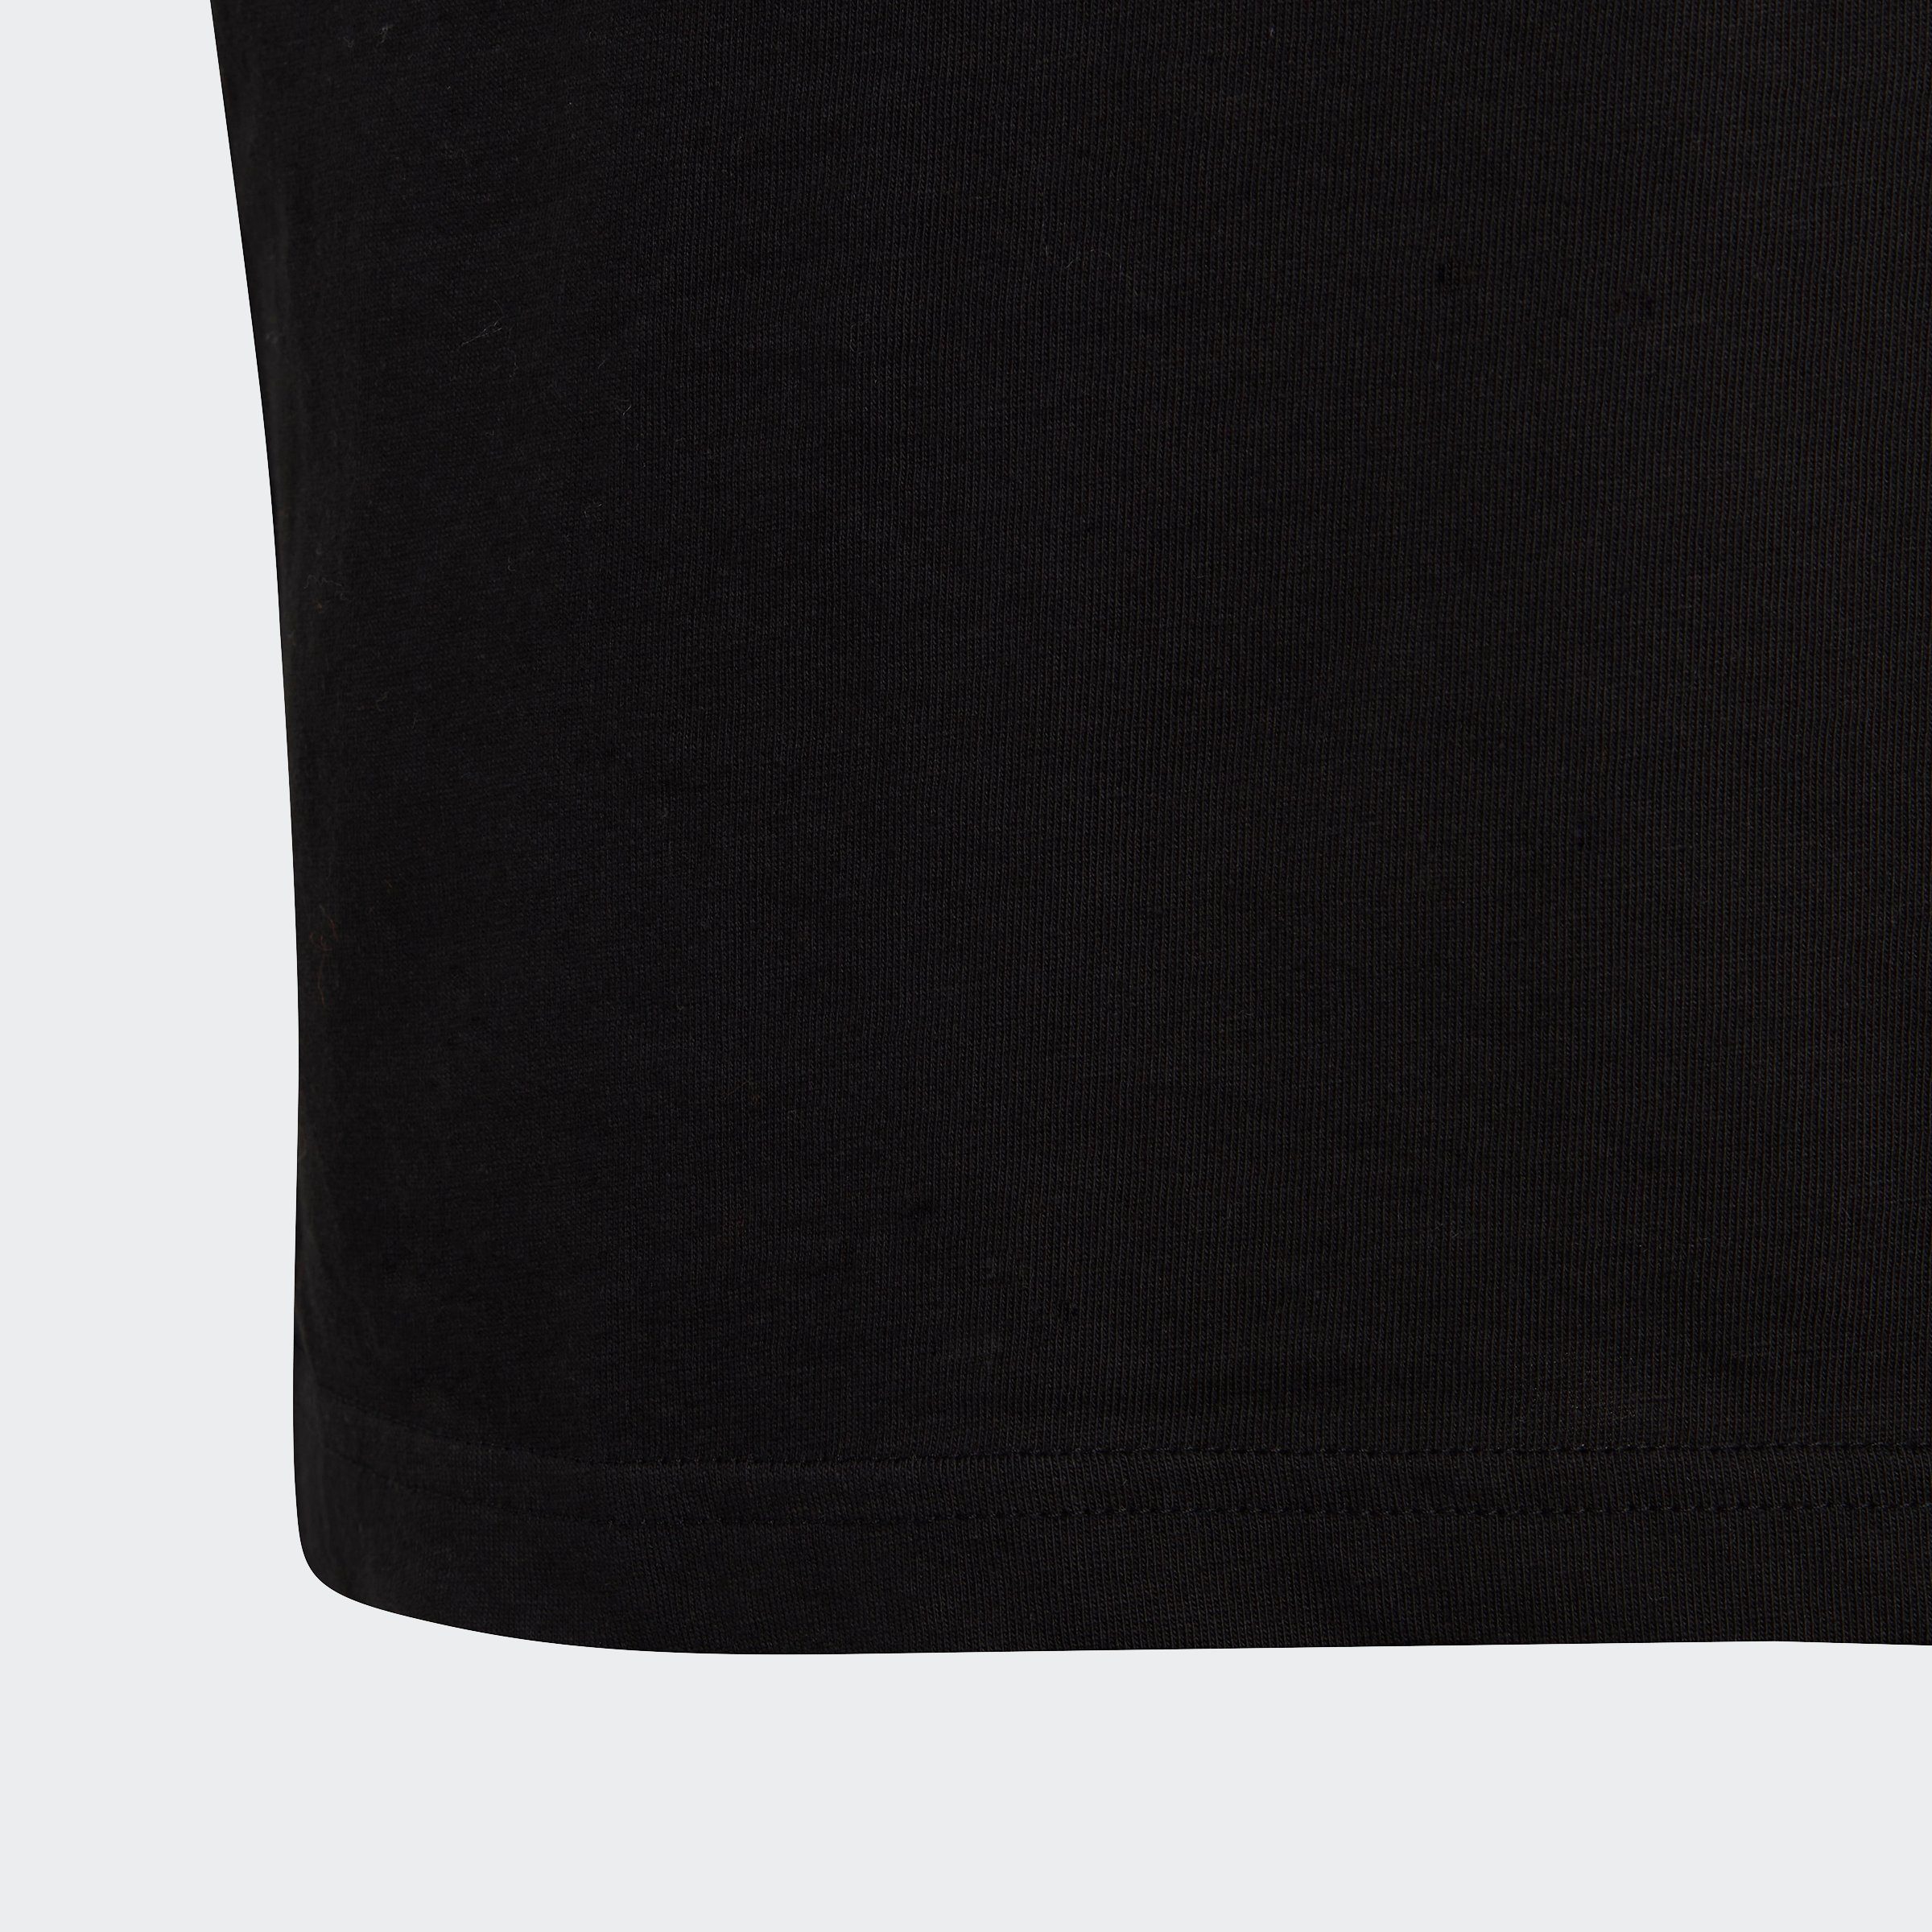 adidas Sportswear White LOGO COTTON / ESSENTIALS Black LINEAR T-Shirt